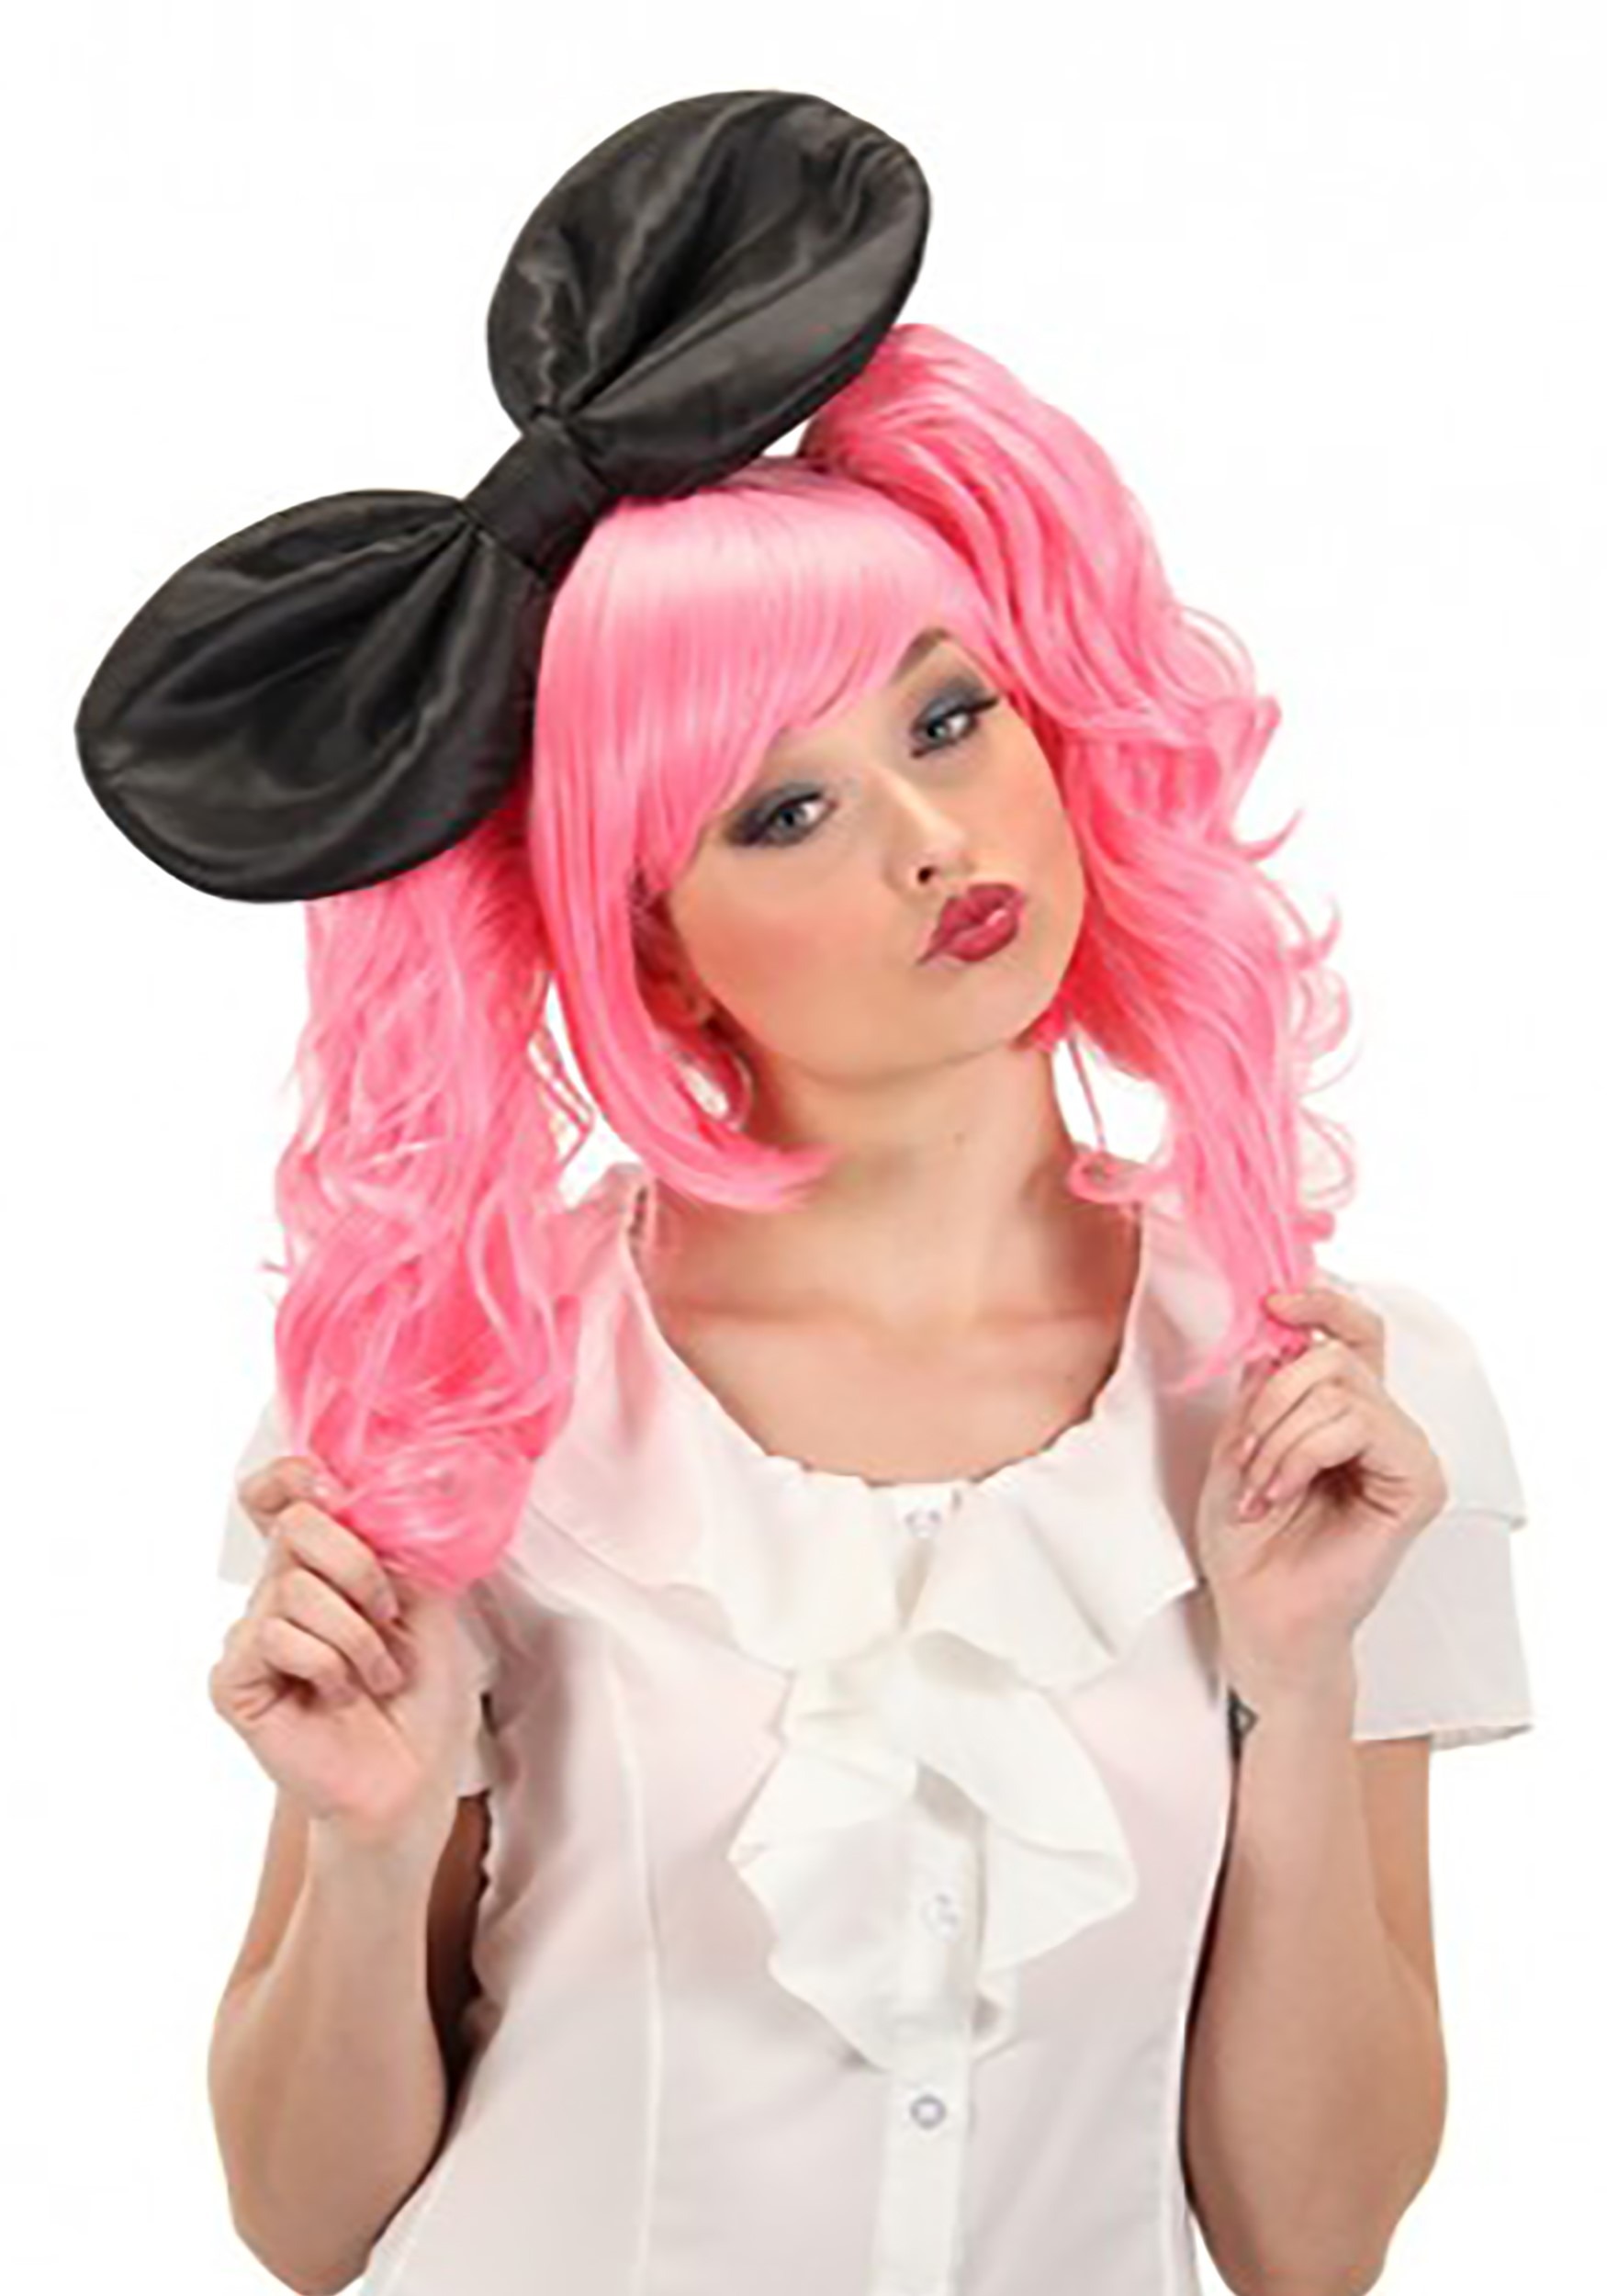 Anime Girls Digital Art Pink Hair Silver Hair Bow And Arrow Toilets  Wallpaper - Resolution:5300x3951 - ID:1264352 - wallha.com